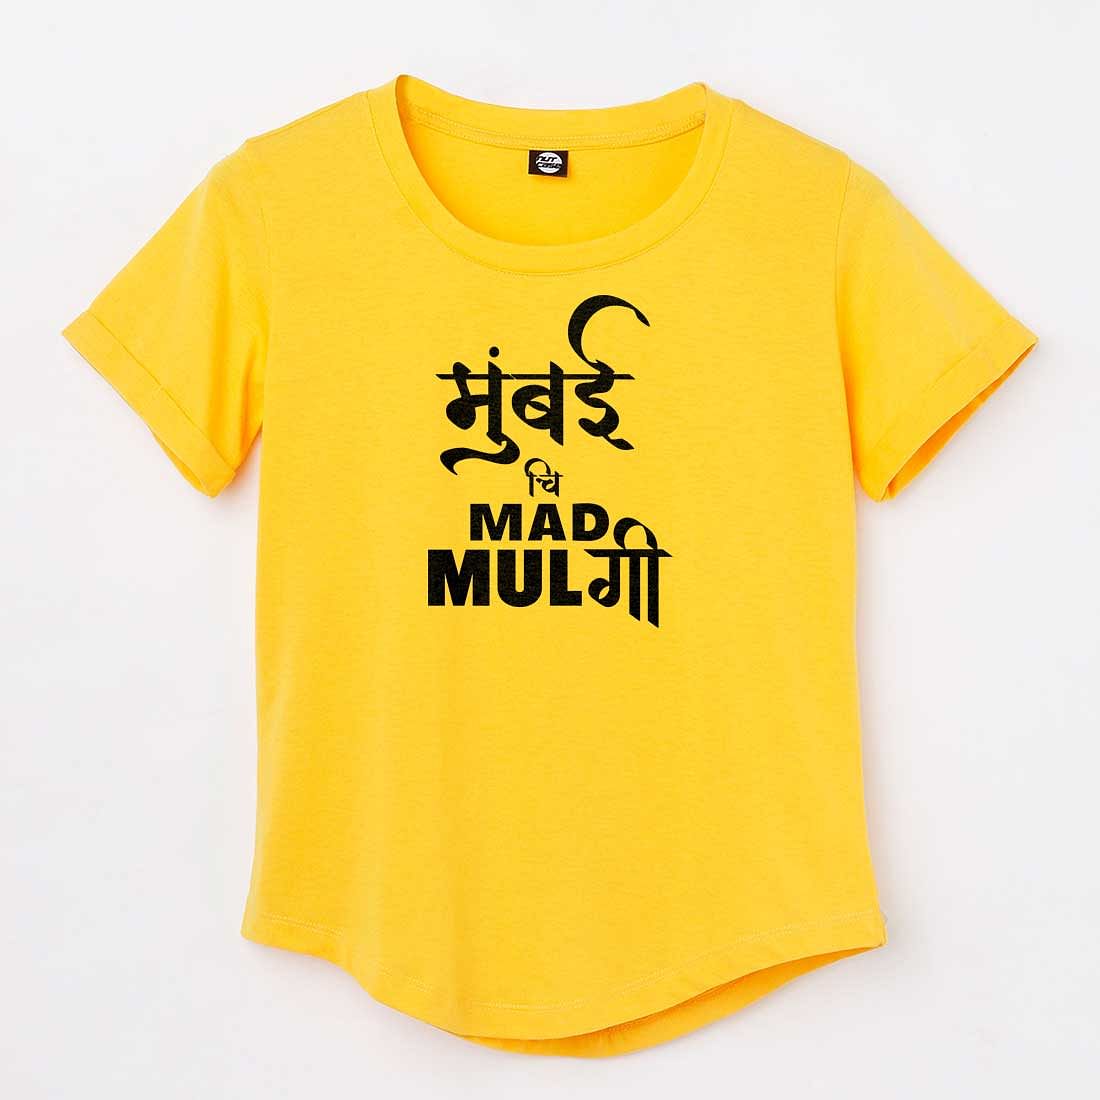 Cool T Shirts For Women Mumbai City Tees - Mumbai Mad Mulgi Nutcase